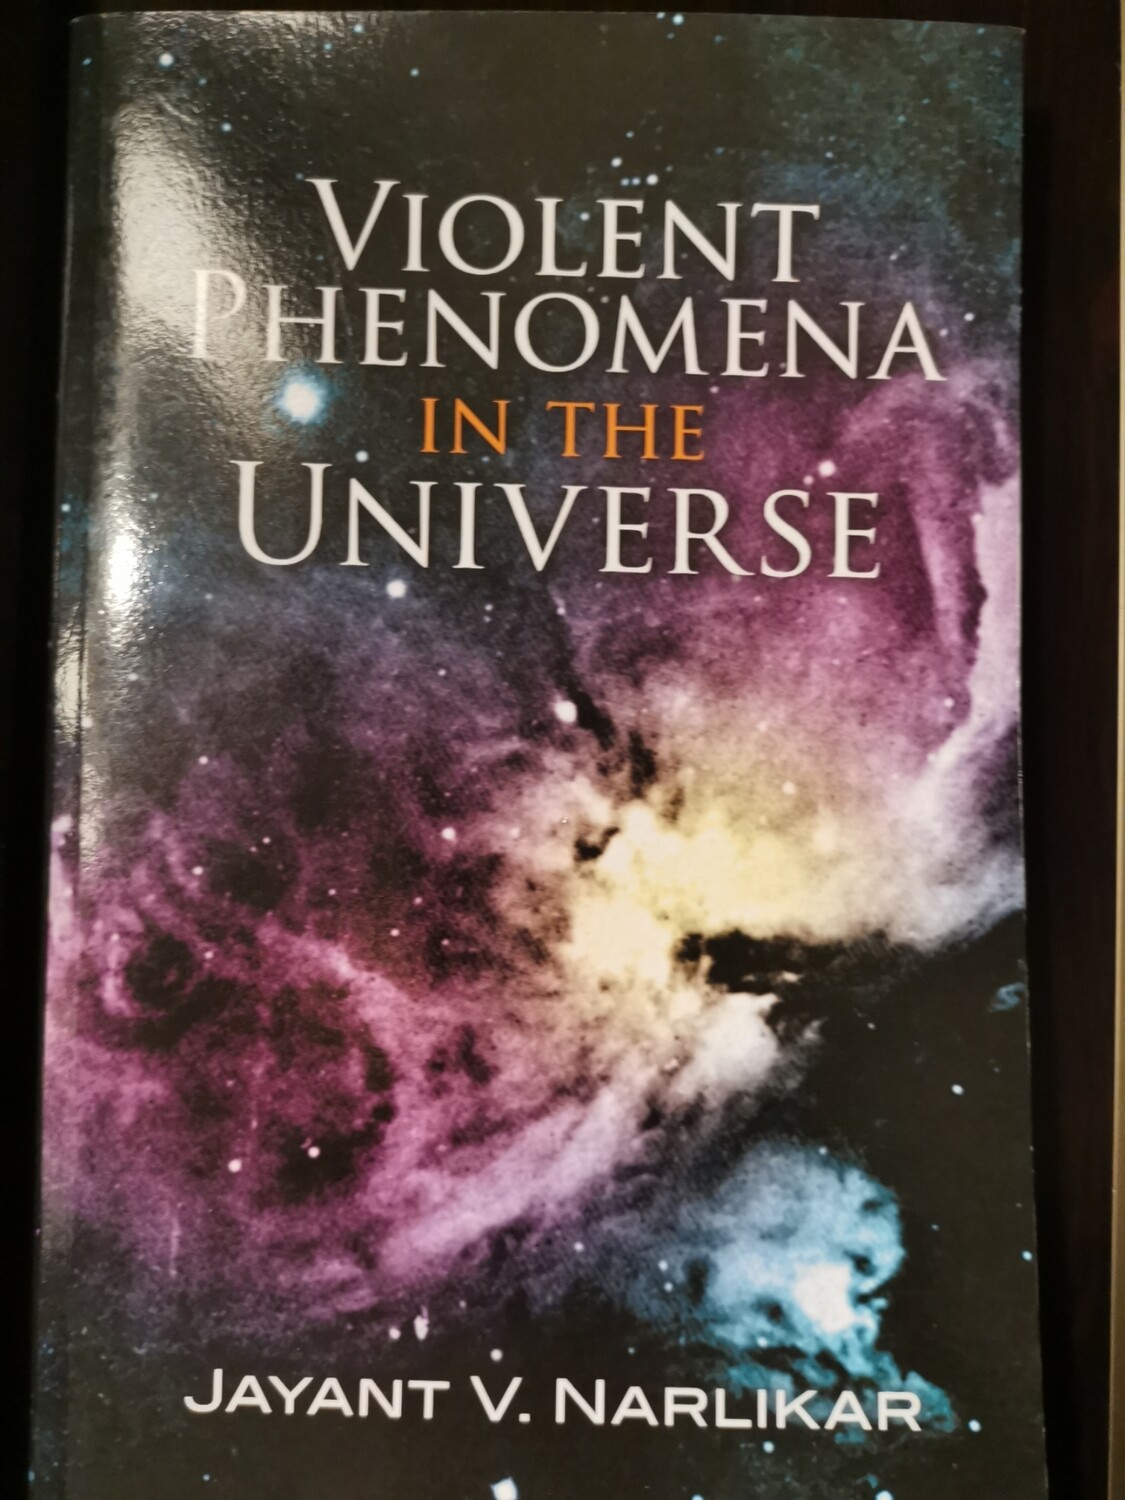 Violent phenomenon in the universe, Jayant V. Narlikar